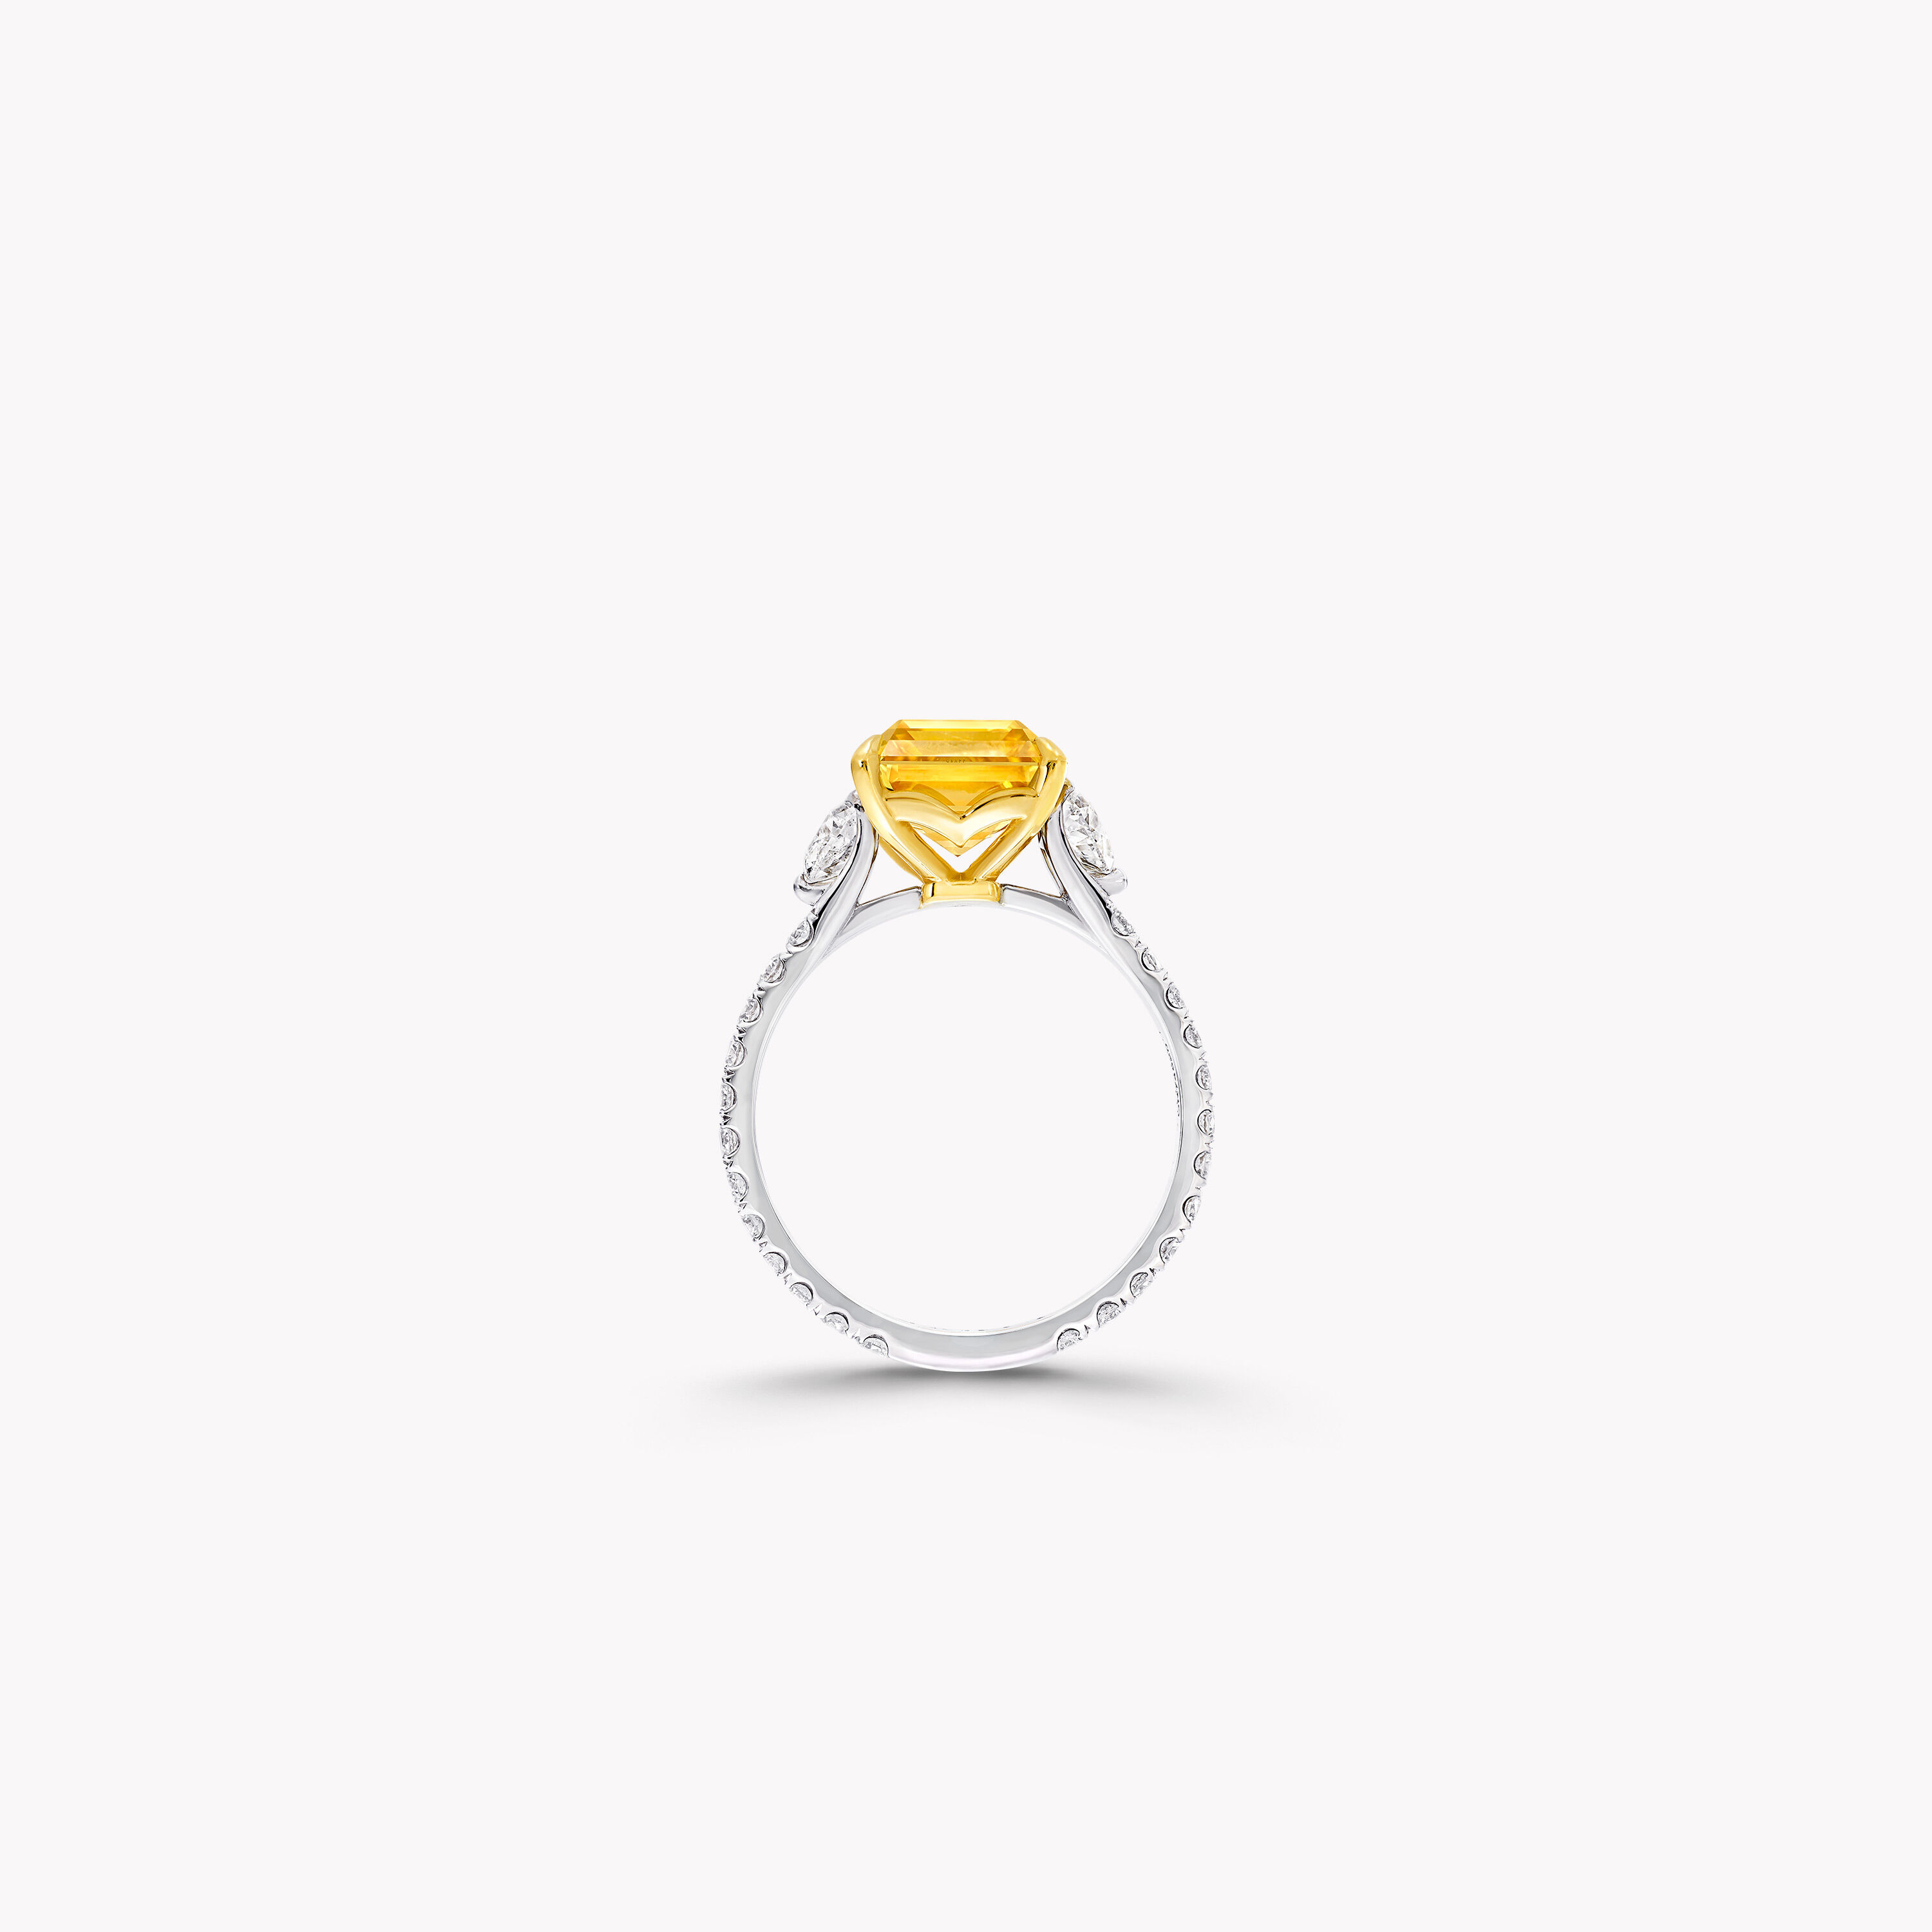 Fancy Vivid Yellow Diamond Ring - Bopies Diamonds & Fine Jewelry